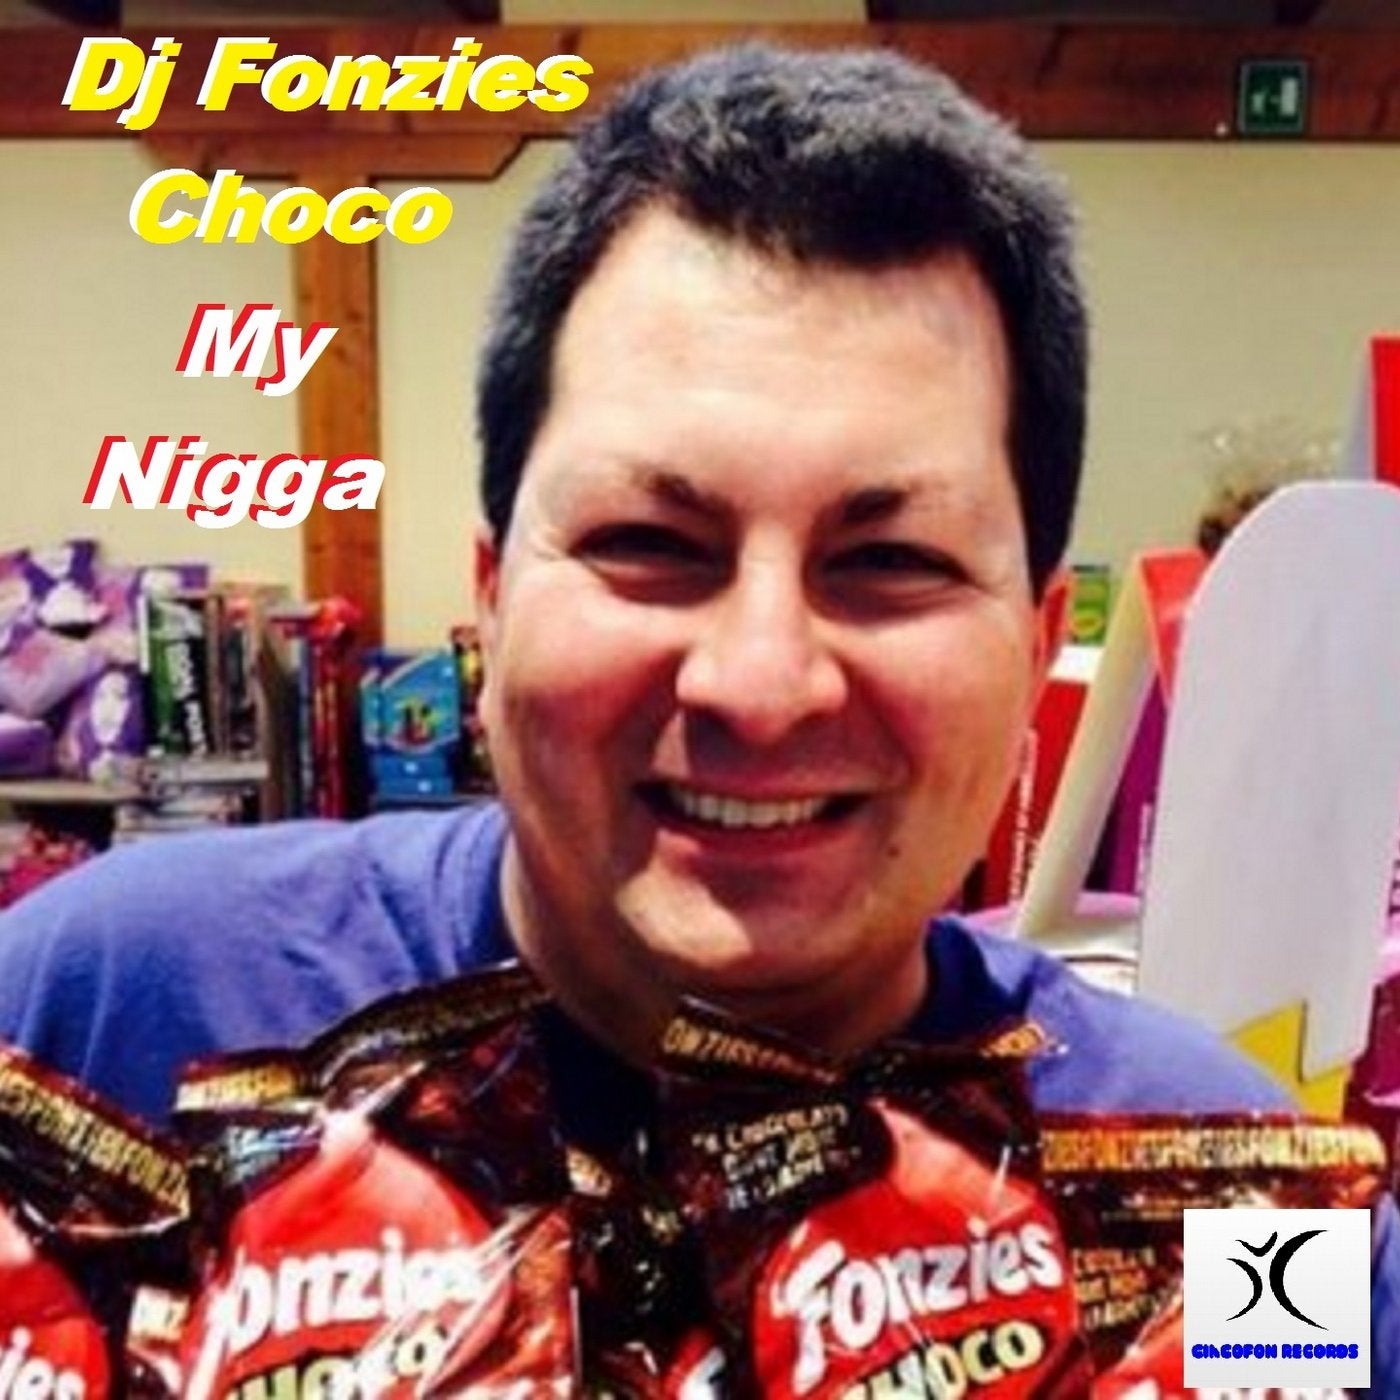 My Nigga (Album 2018 of Dj Fonzies Choco)